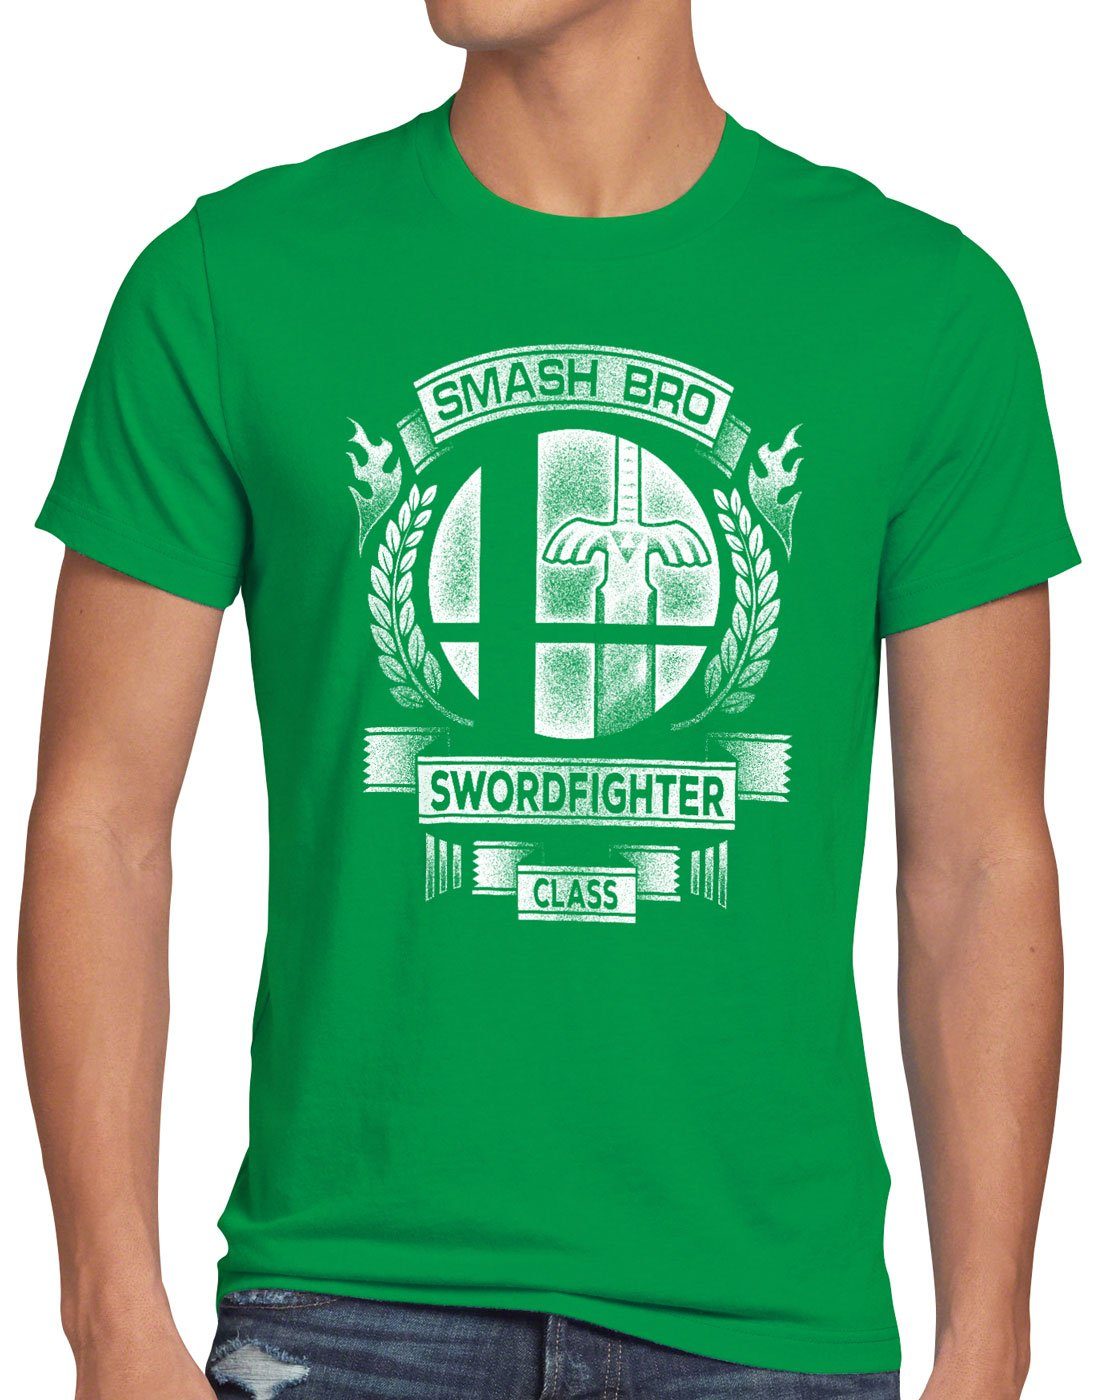 brothers Smash Print-Shirt ultimate Swordfighter style3 grün T-Shirt brawl super switch Herren